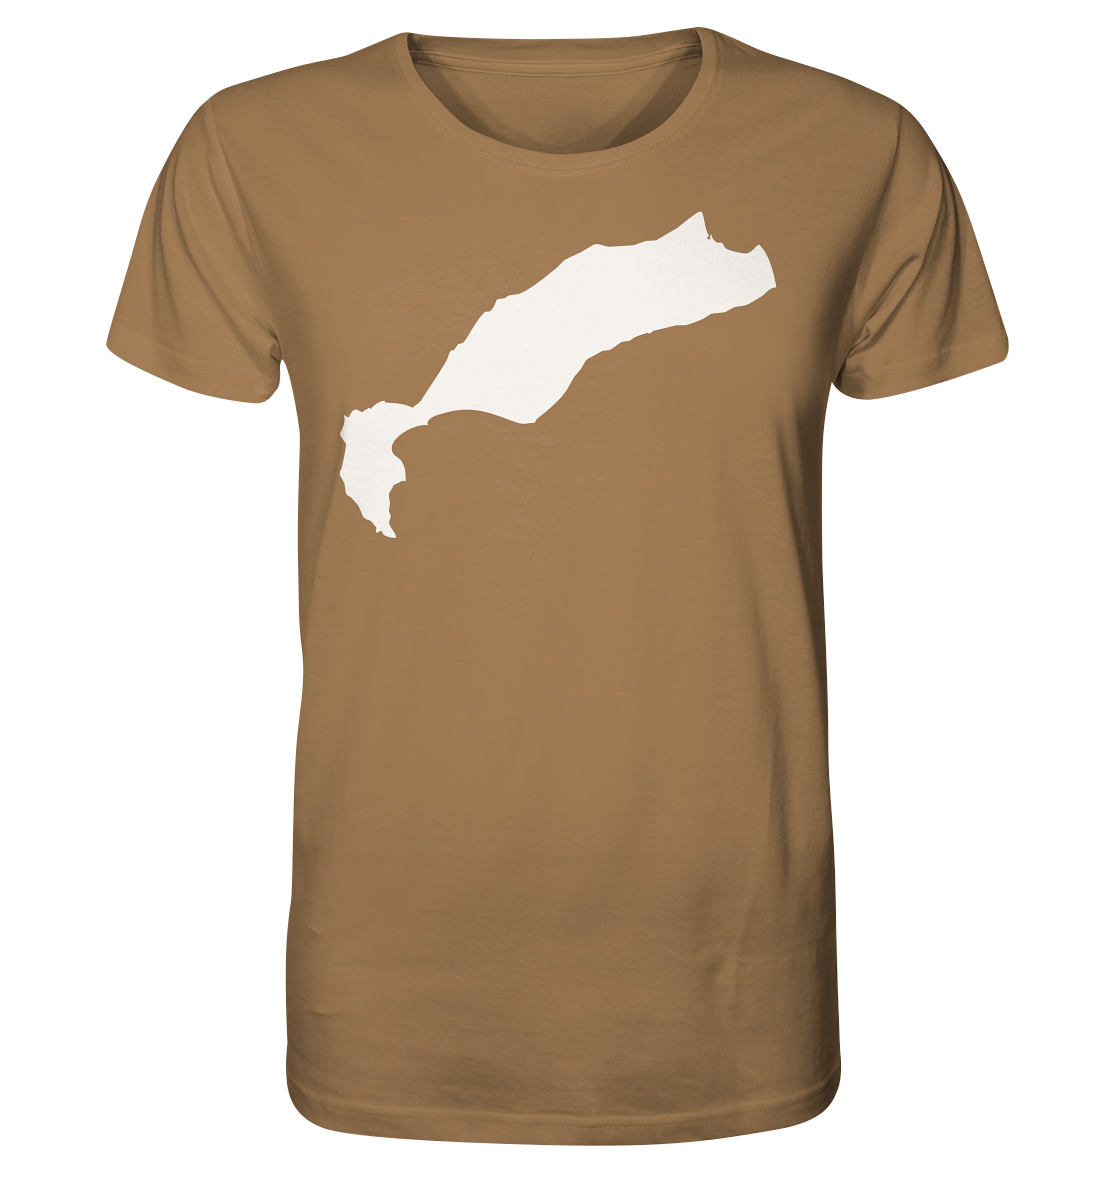 Kos Island Silhouette - Organic Shirt